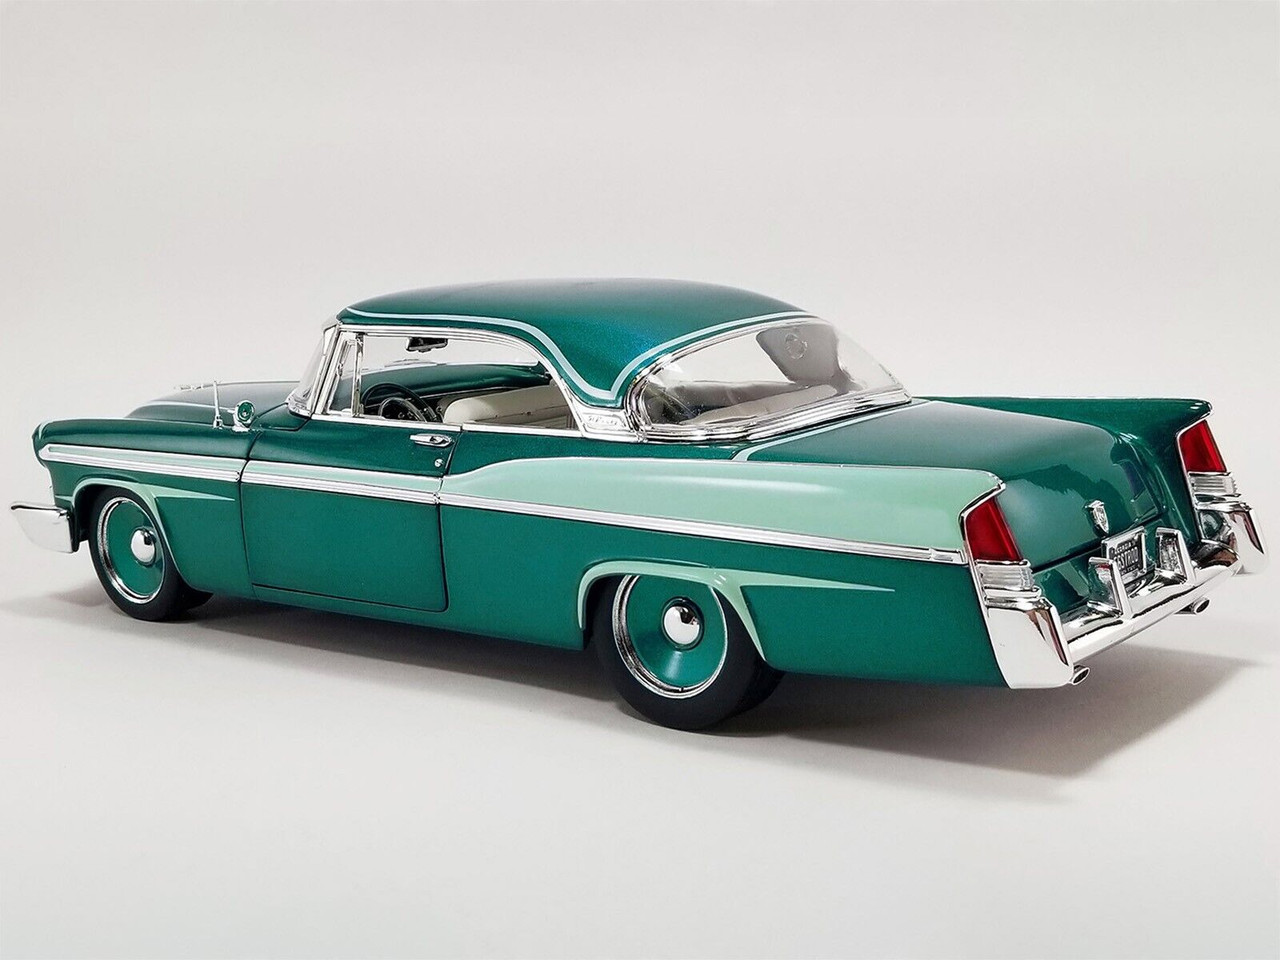 1/18 ACME 1956 Chrysler New Yorker  St. Regis Cruisers Southern Kings Customs (Mint Green) Diecast Car Model